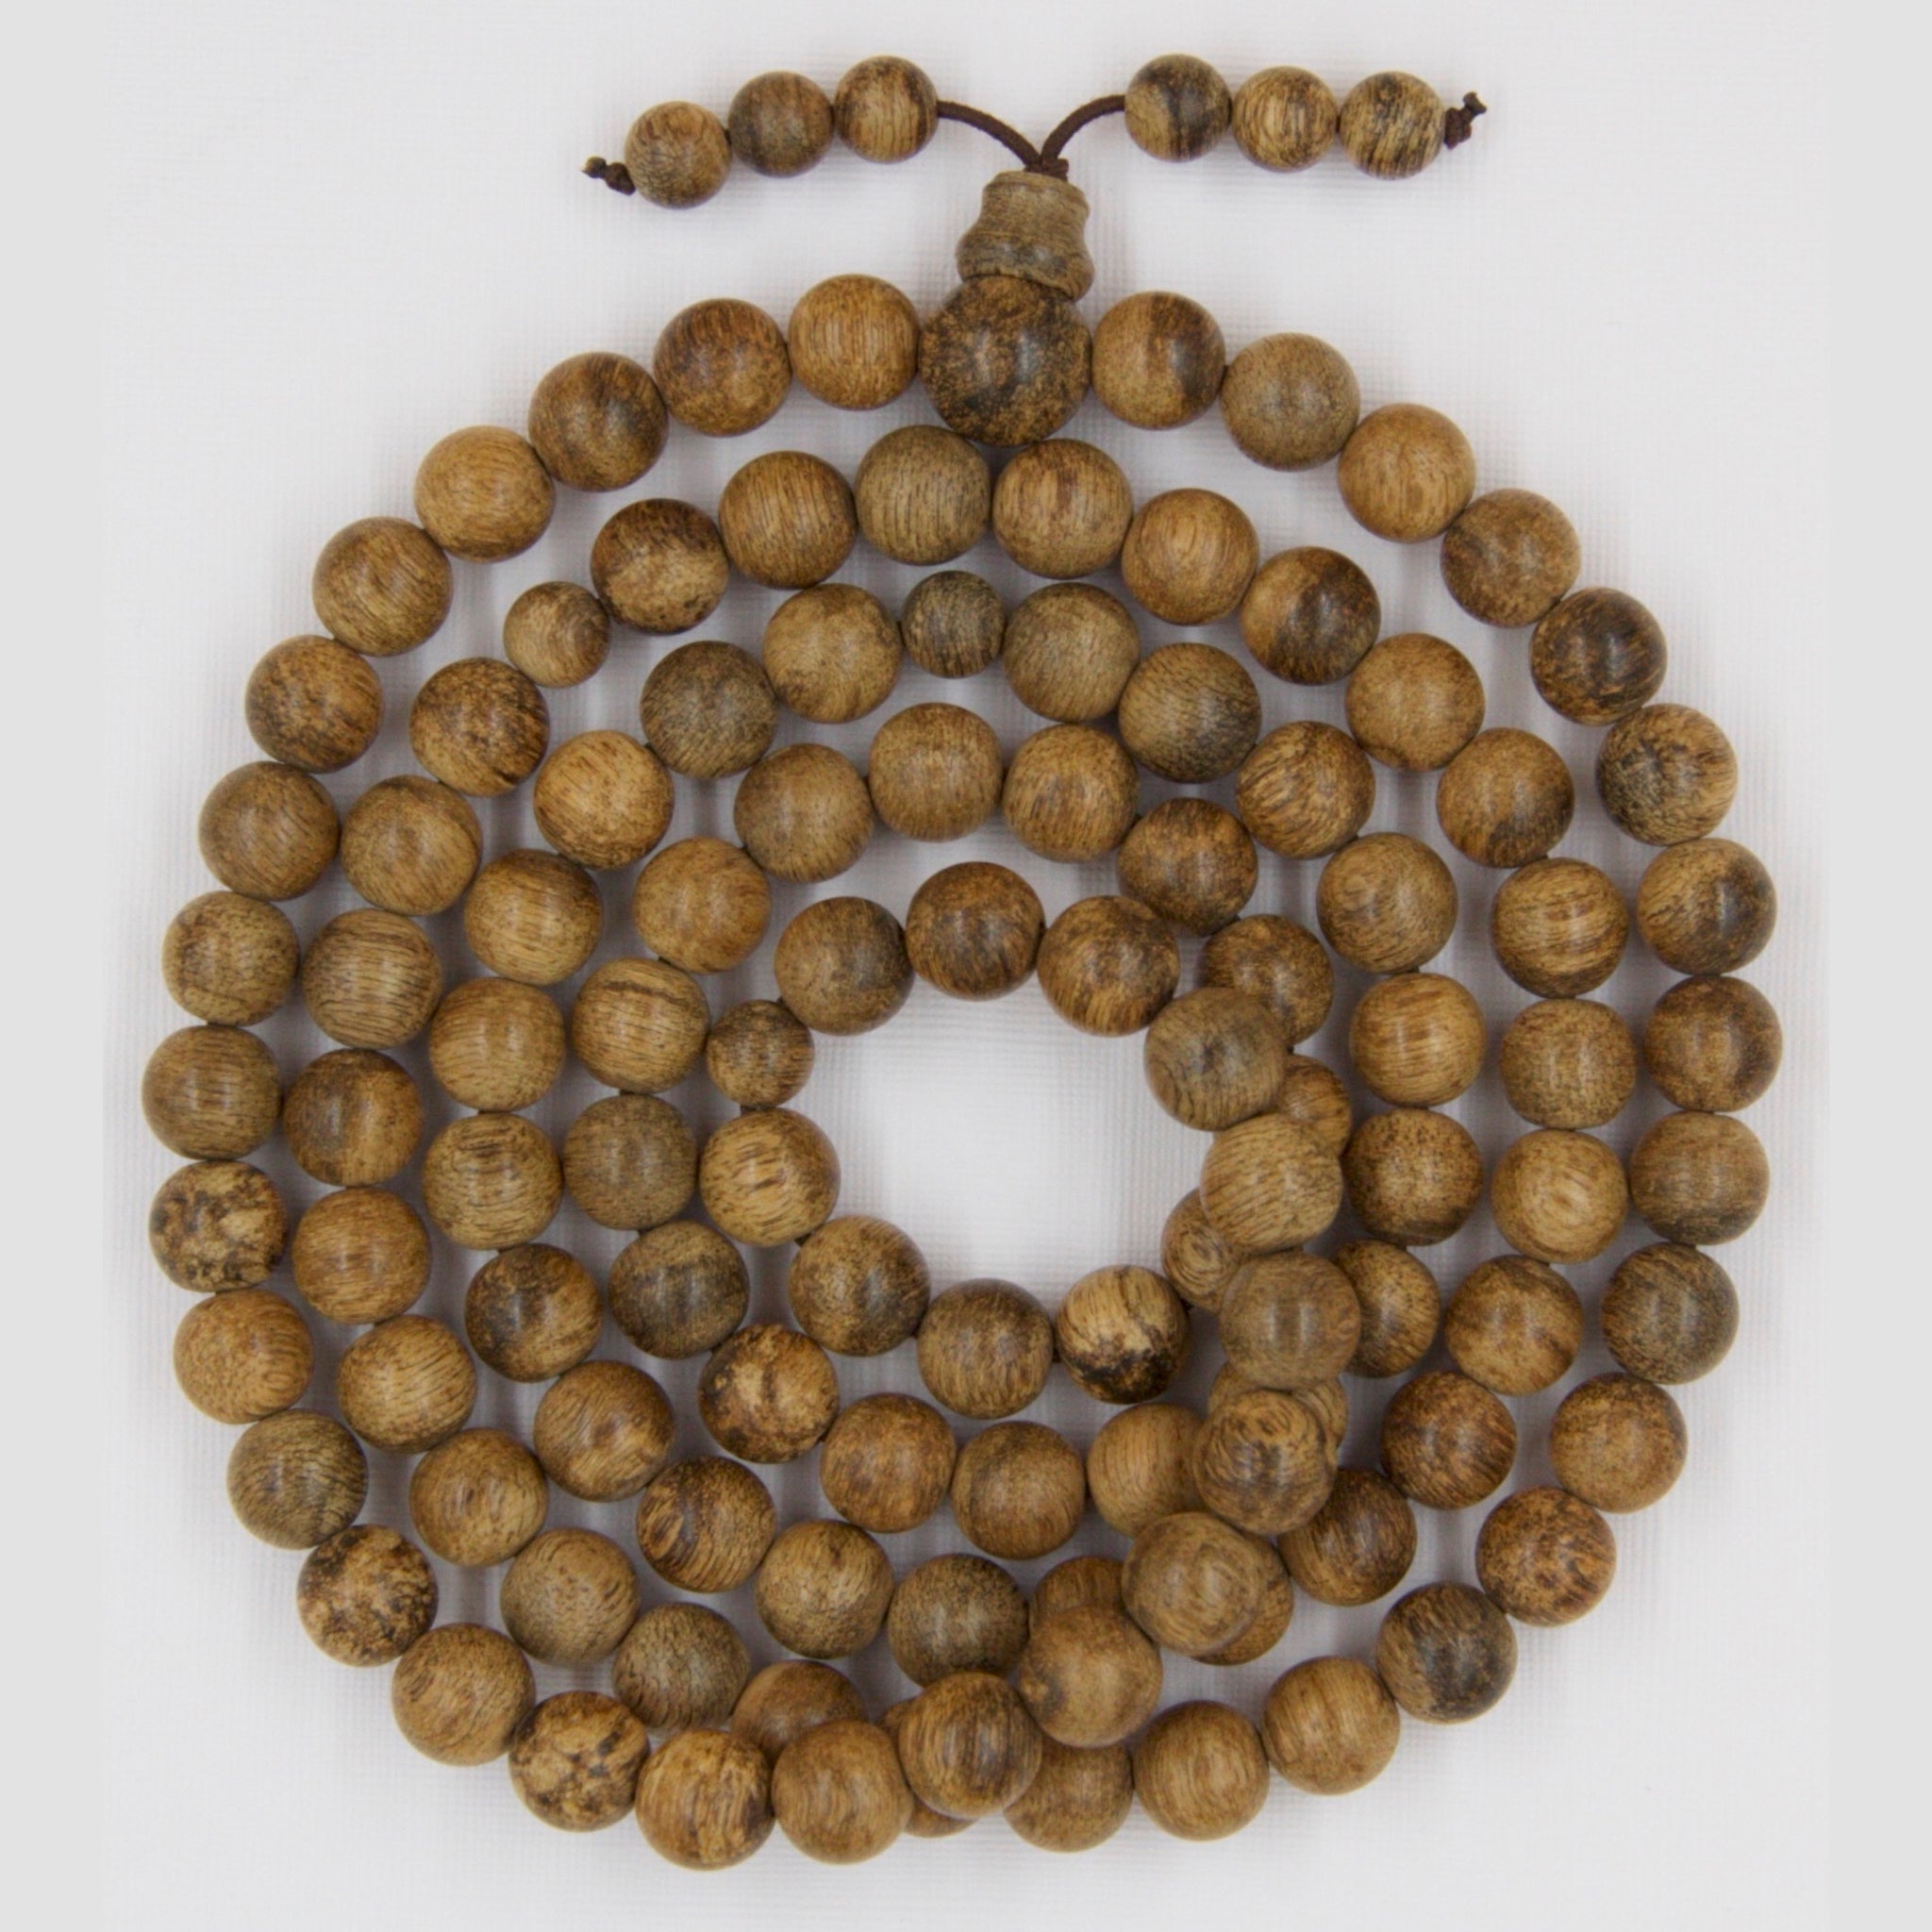 [B8] Agarwood Beads Chain (Floating) - Papua